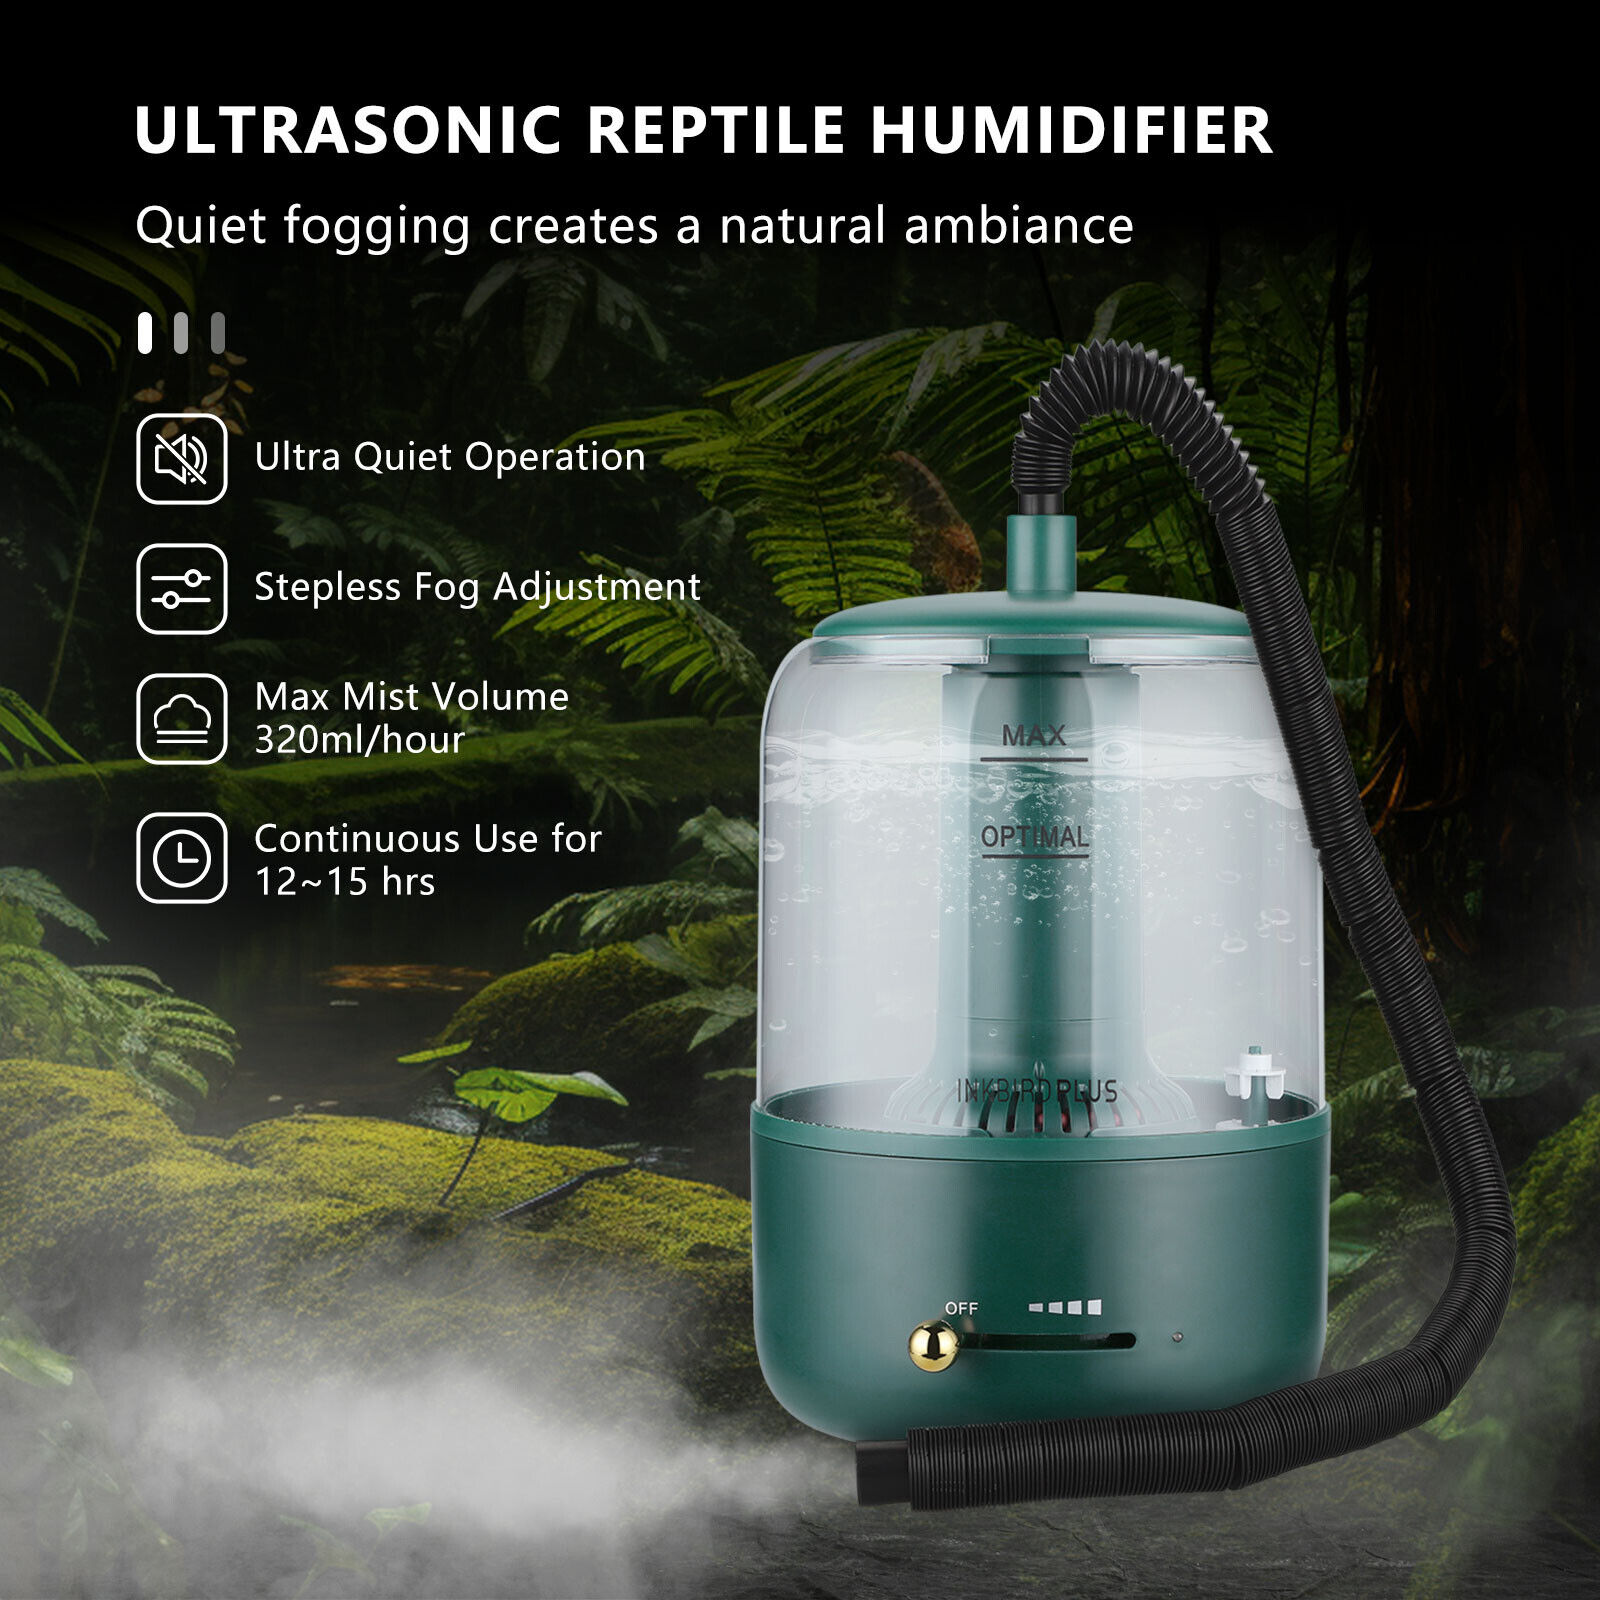 Inkbird Reptile Humidifier Pet Supplies Fogger Adjustable Fog Tank 4L Amphibians